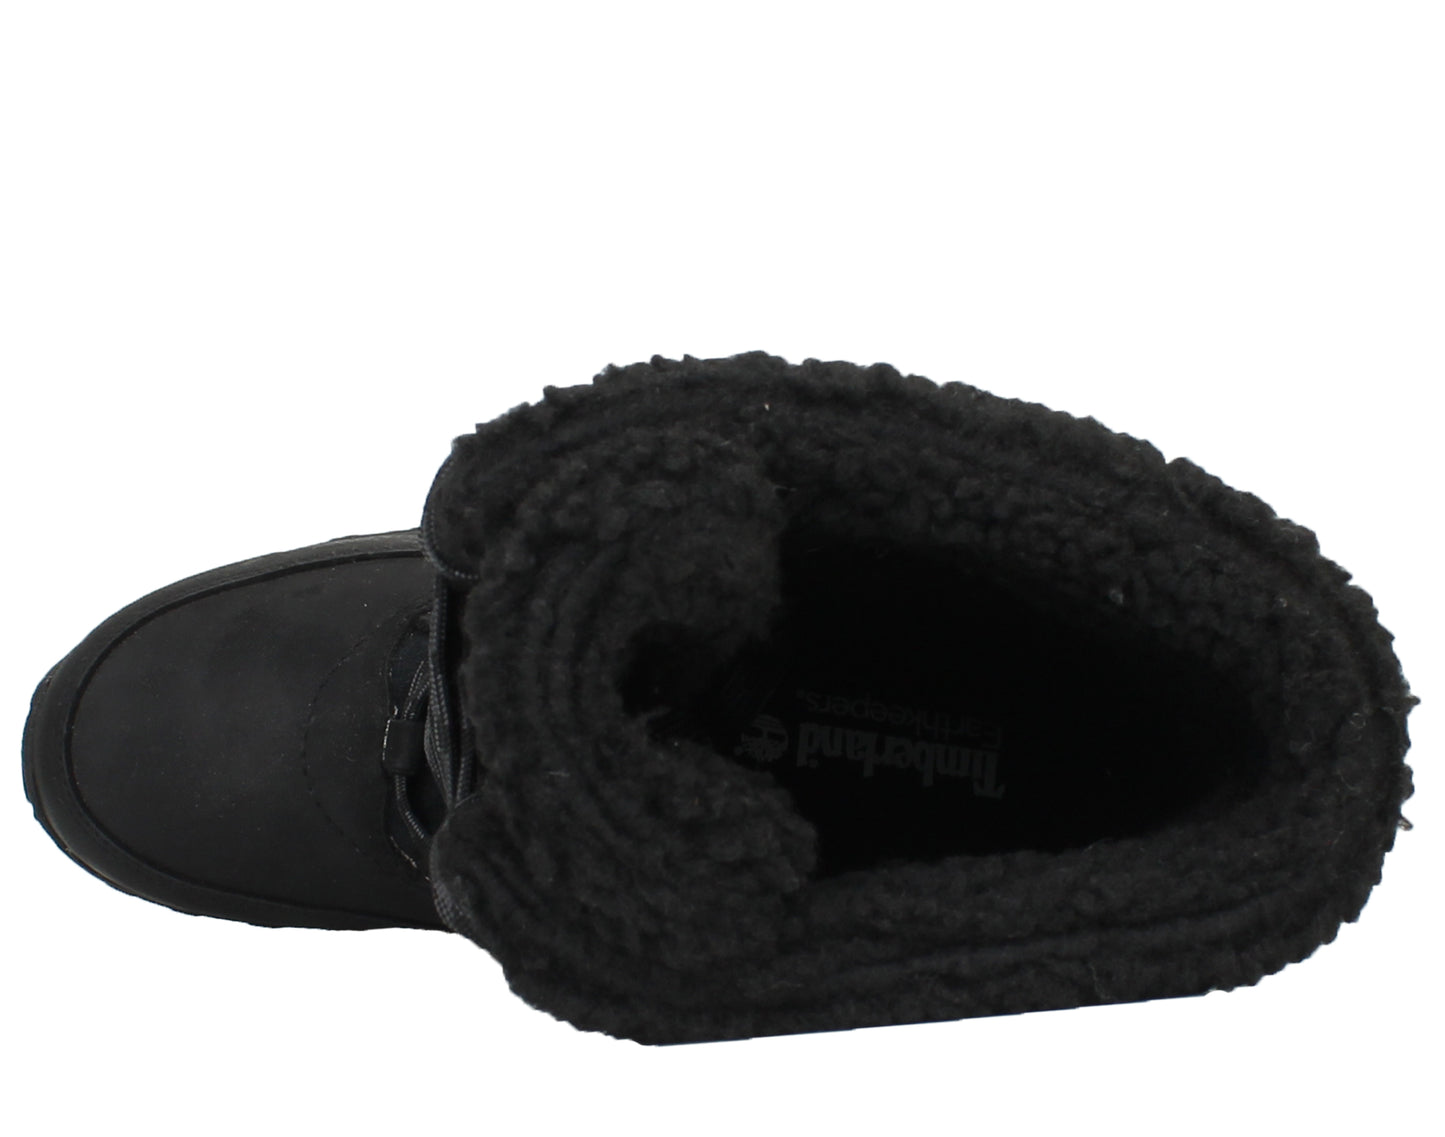 Timberland EK Willowood Waterproof Insulated Black Women's Boots 5847A